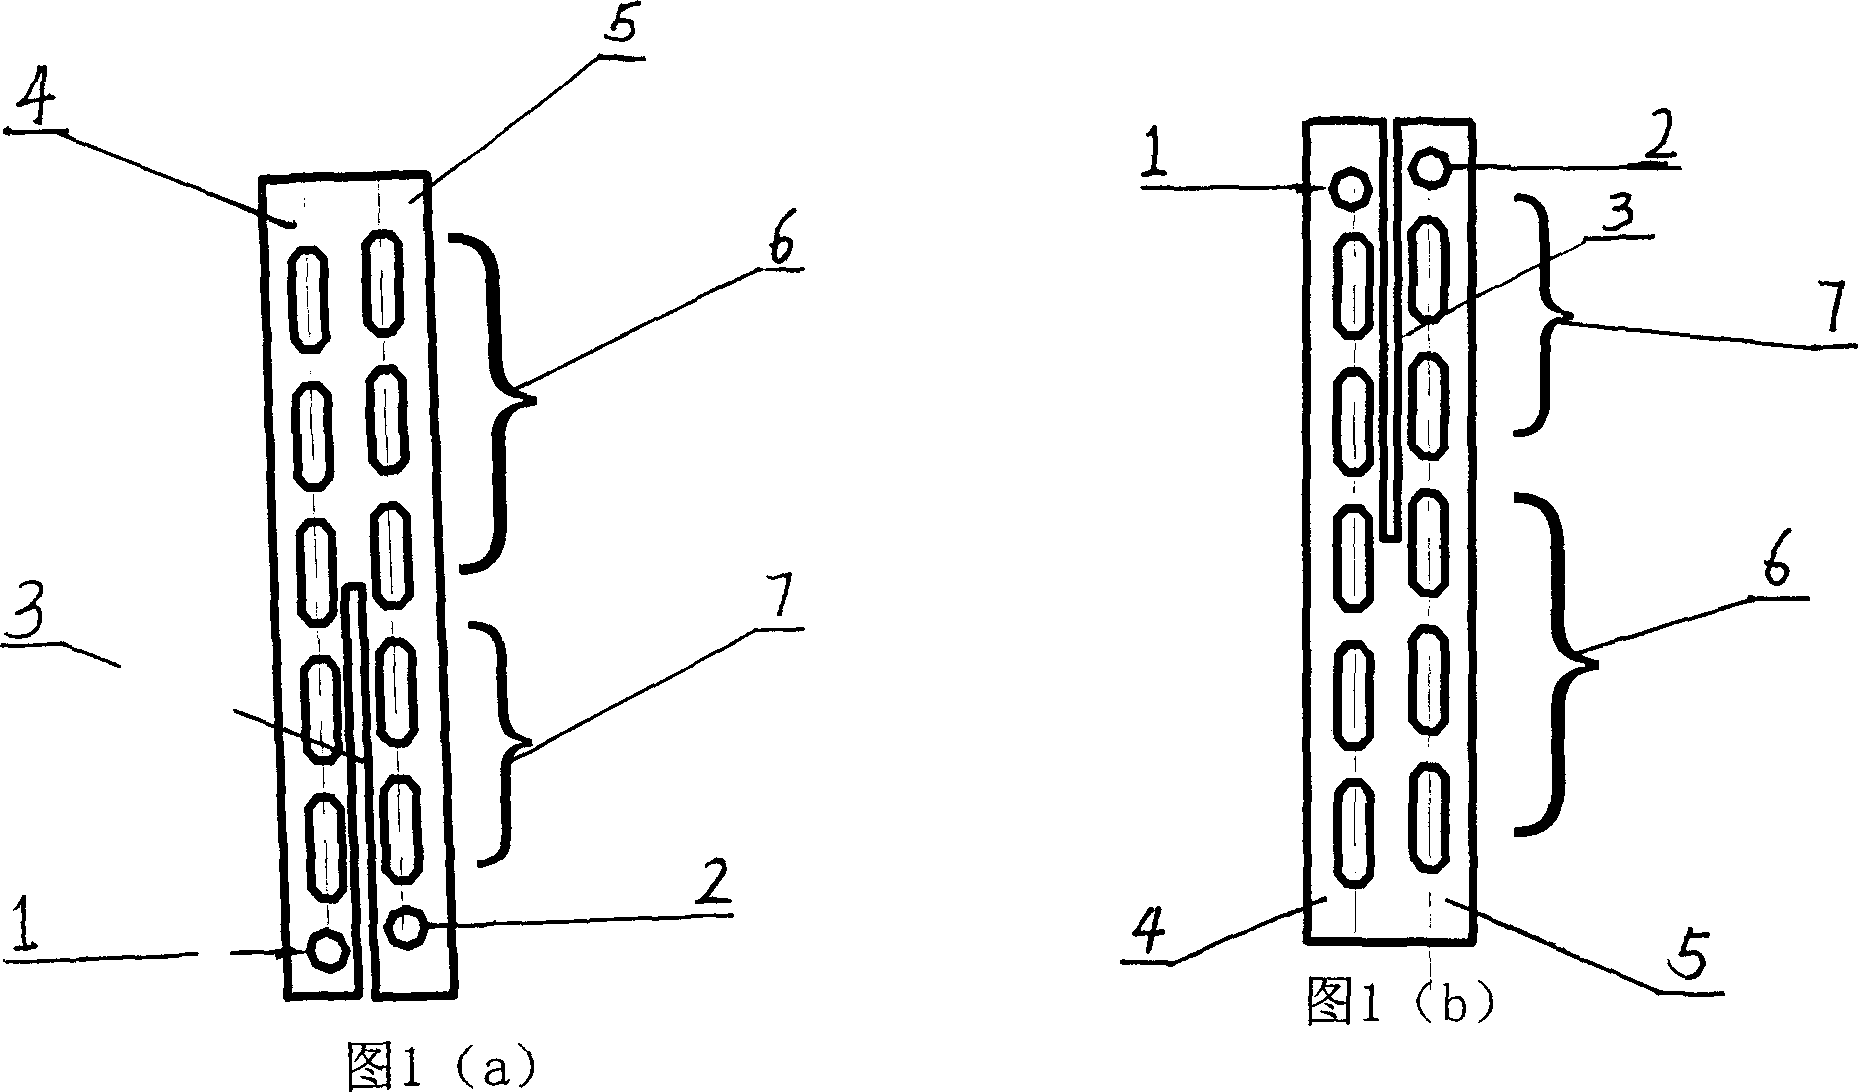 Heat exchanger flow circuit arranging method and device